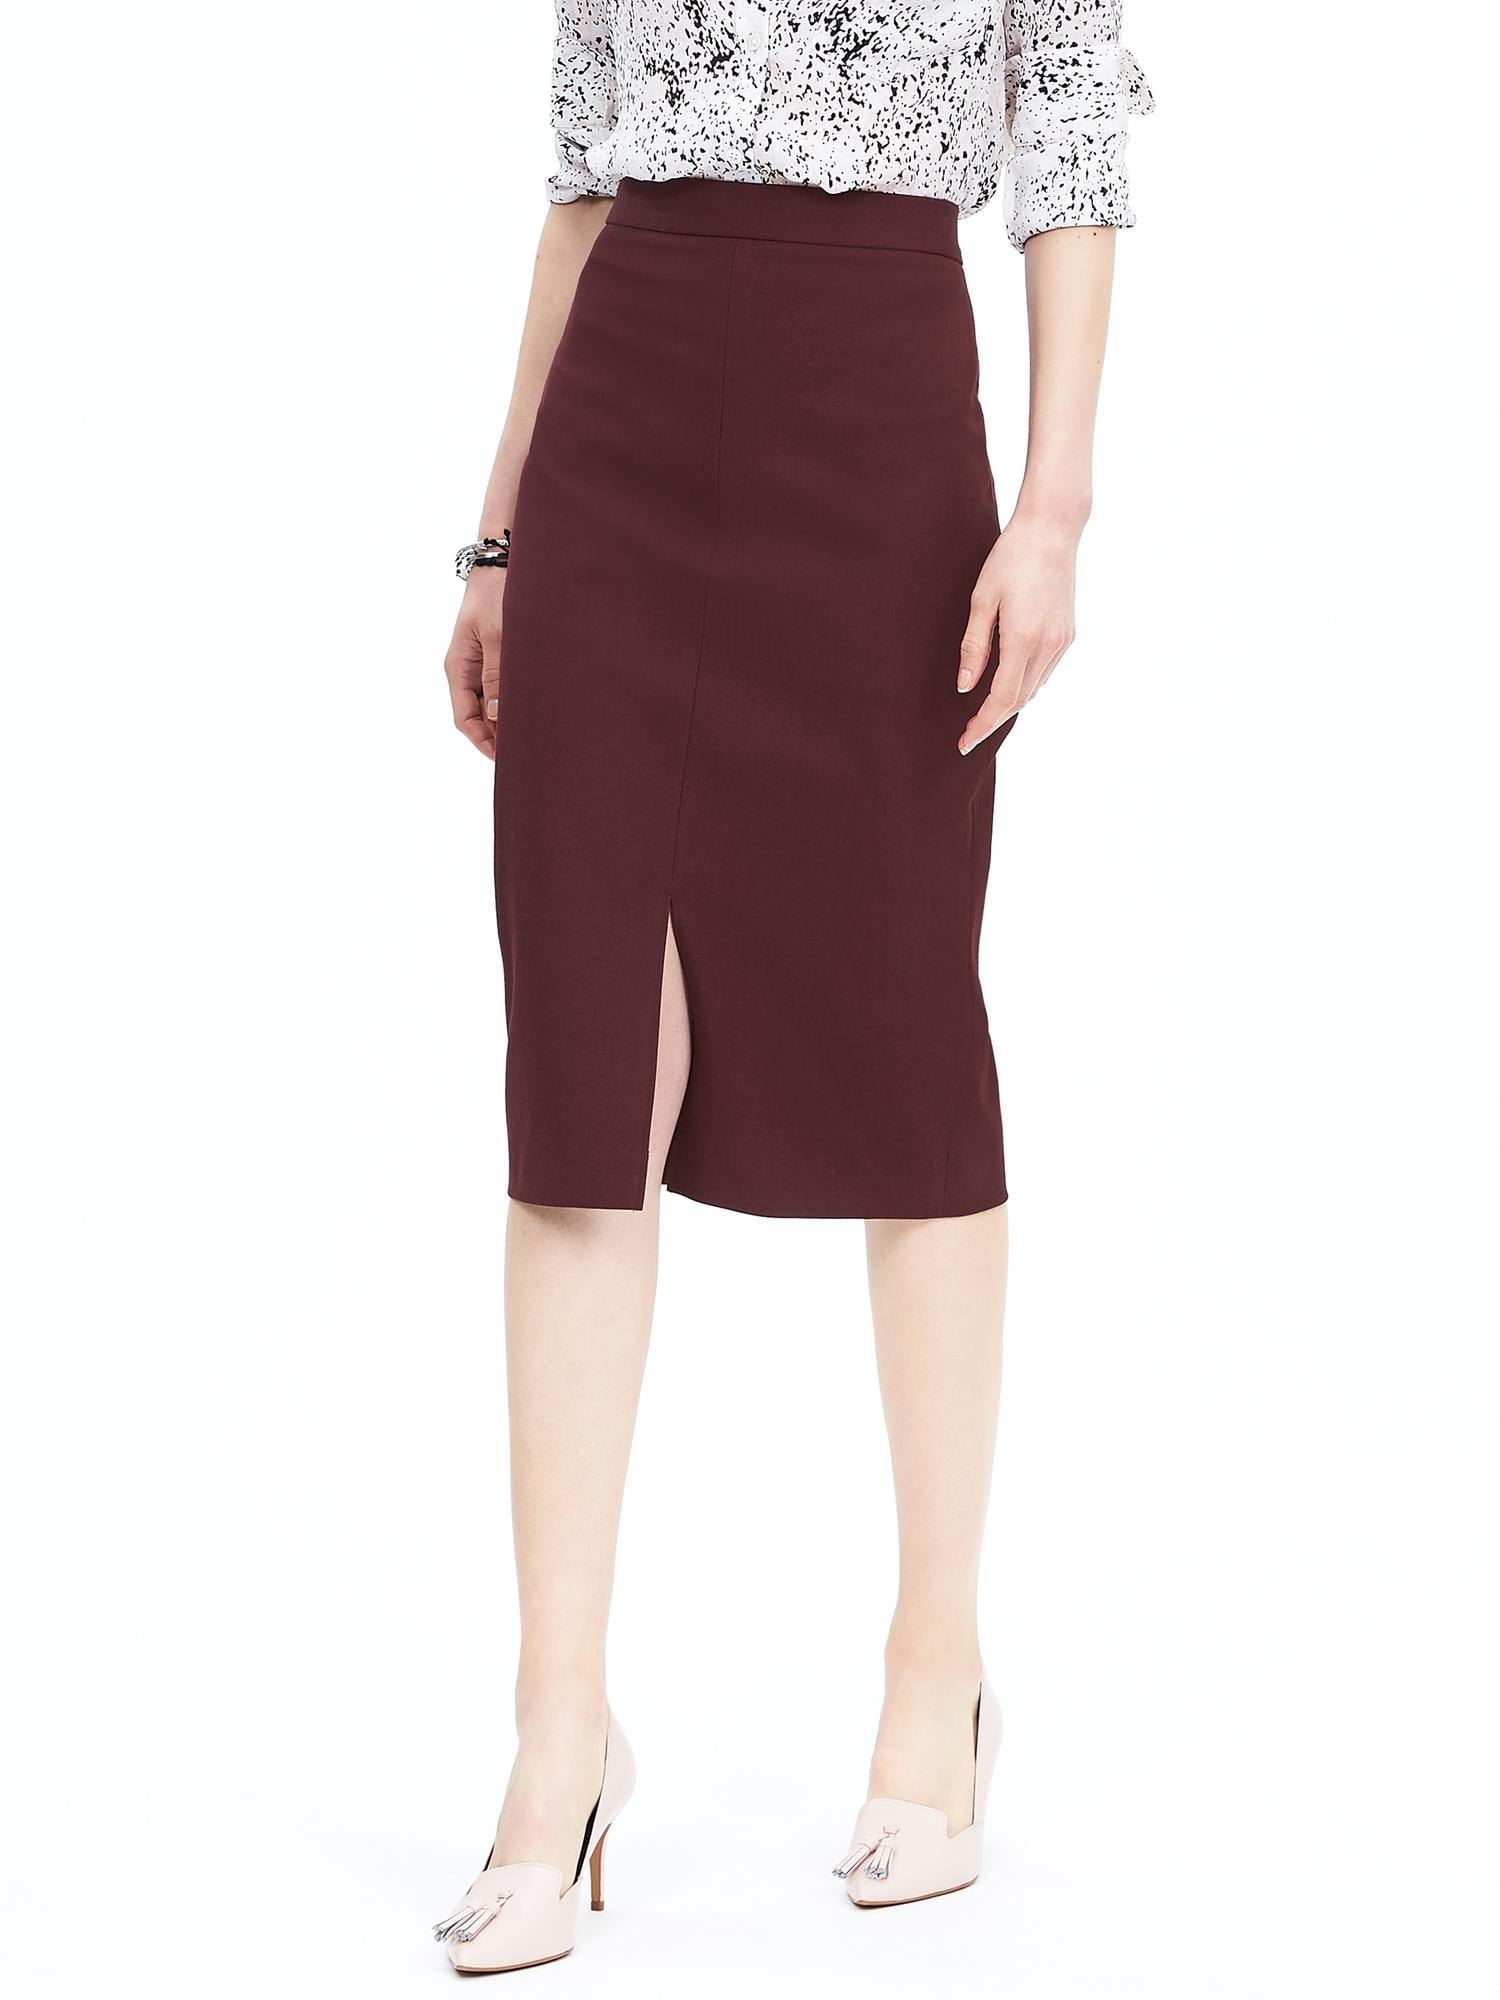 Sloan-Fit Burgundy Pencil Skirt